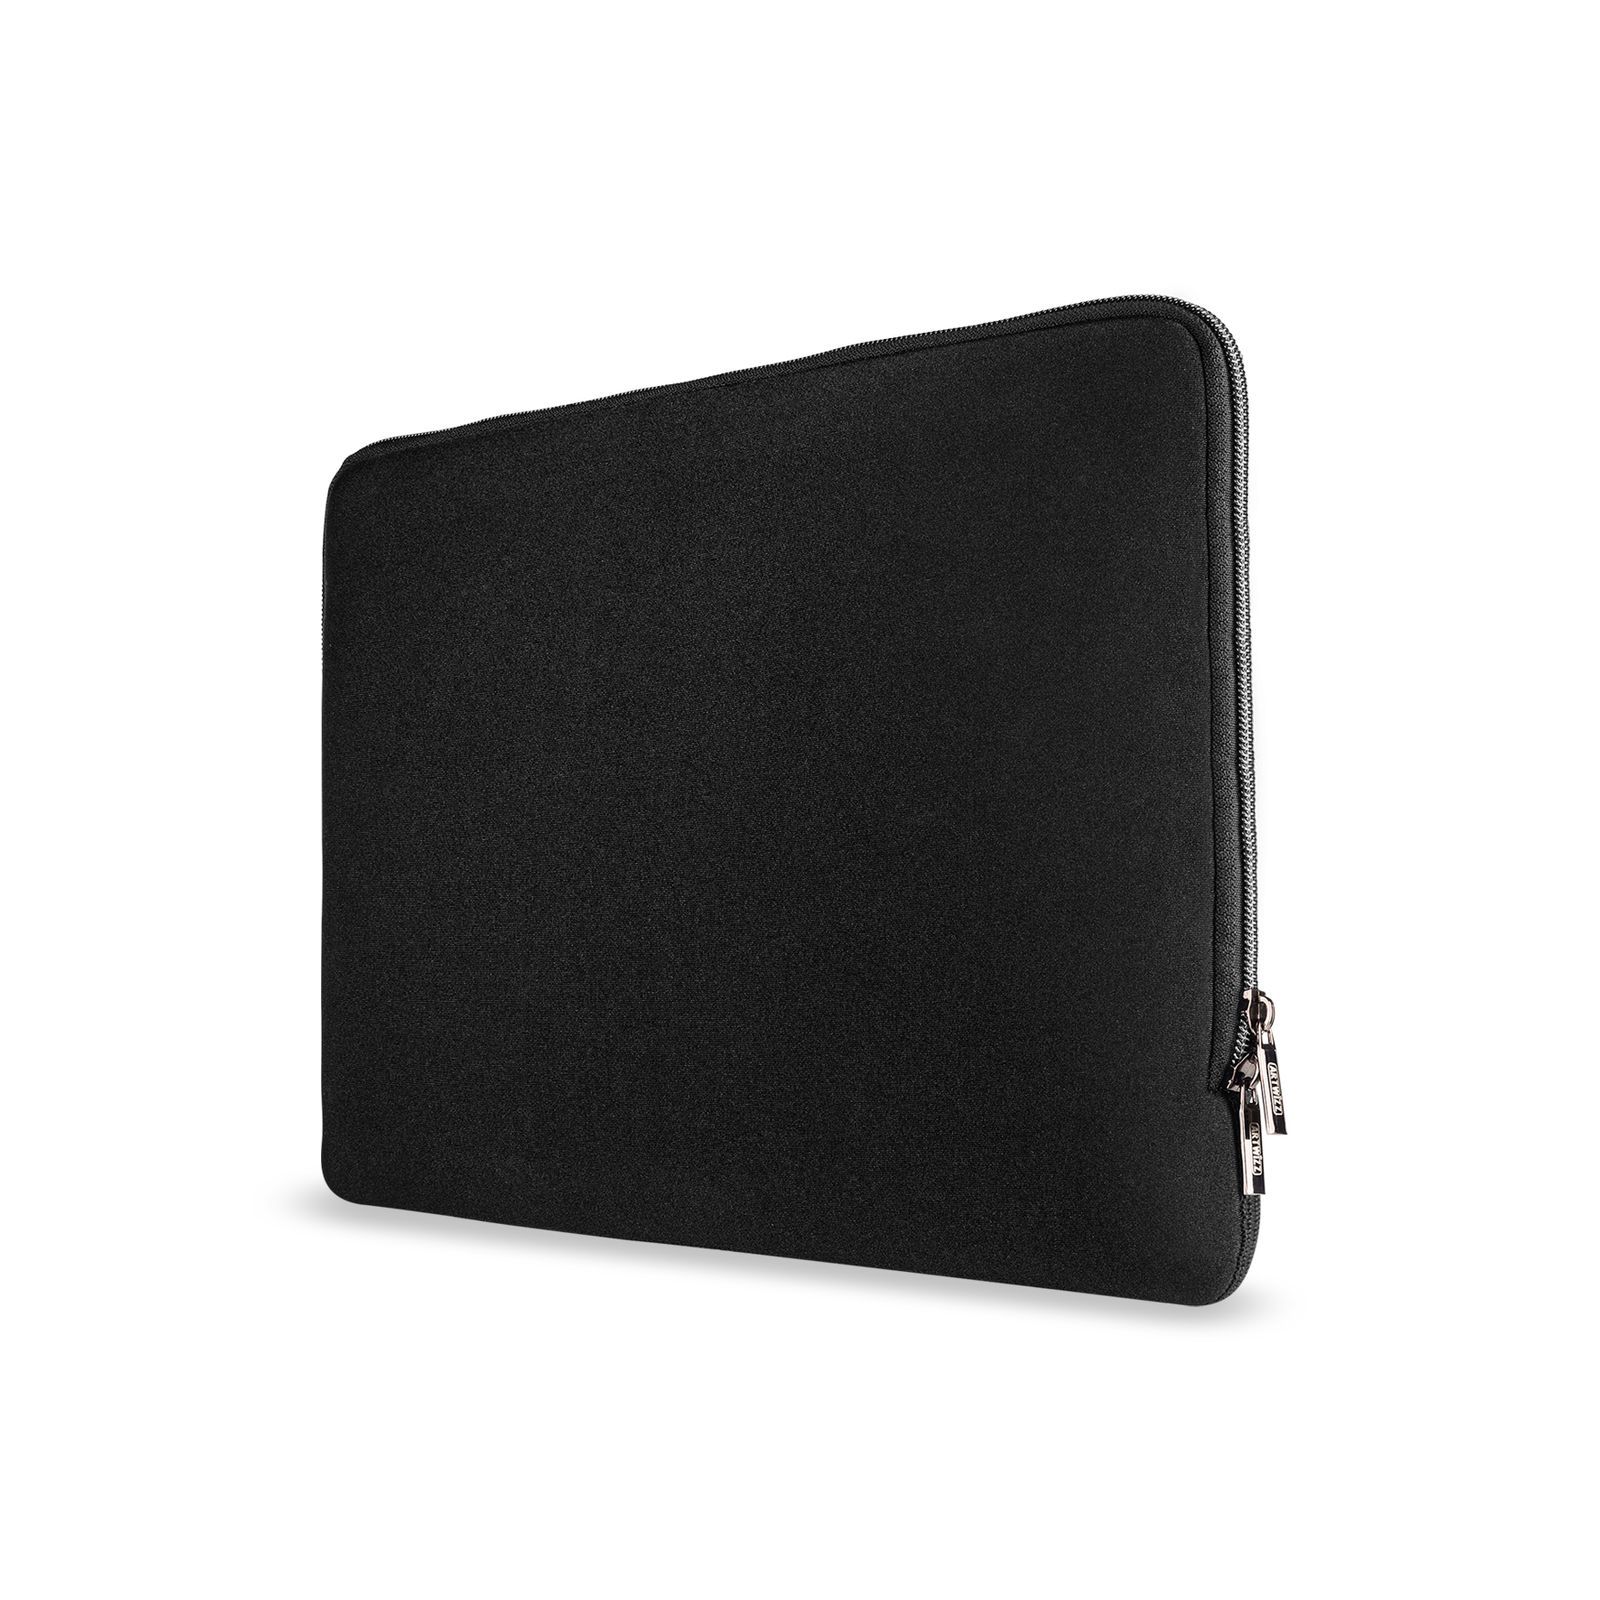 Sleeve Neoprene Tablet ARTWIZZ Apple Sleeve Neopren, für Schwarz Sleeve